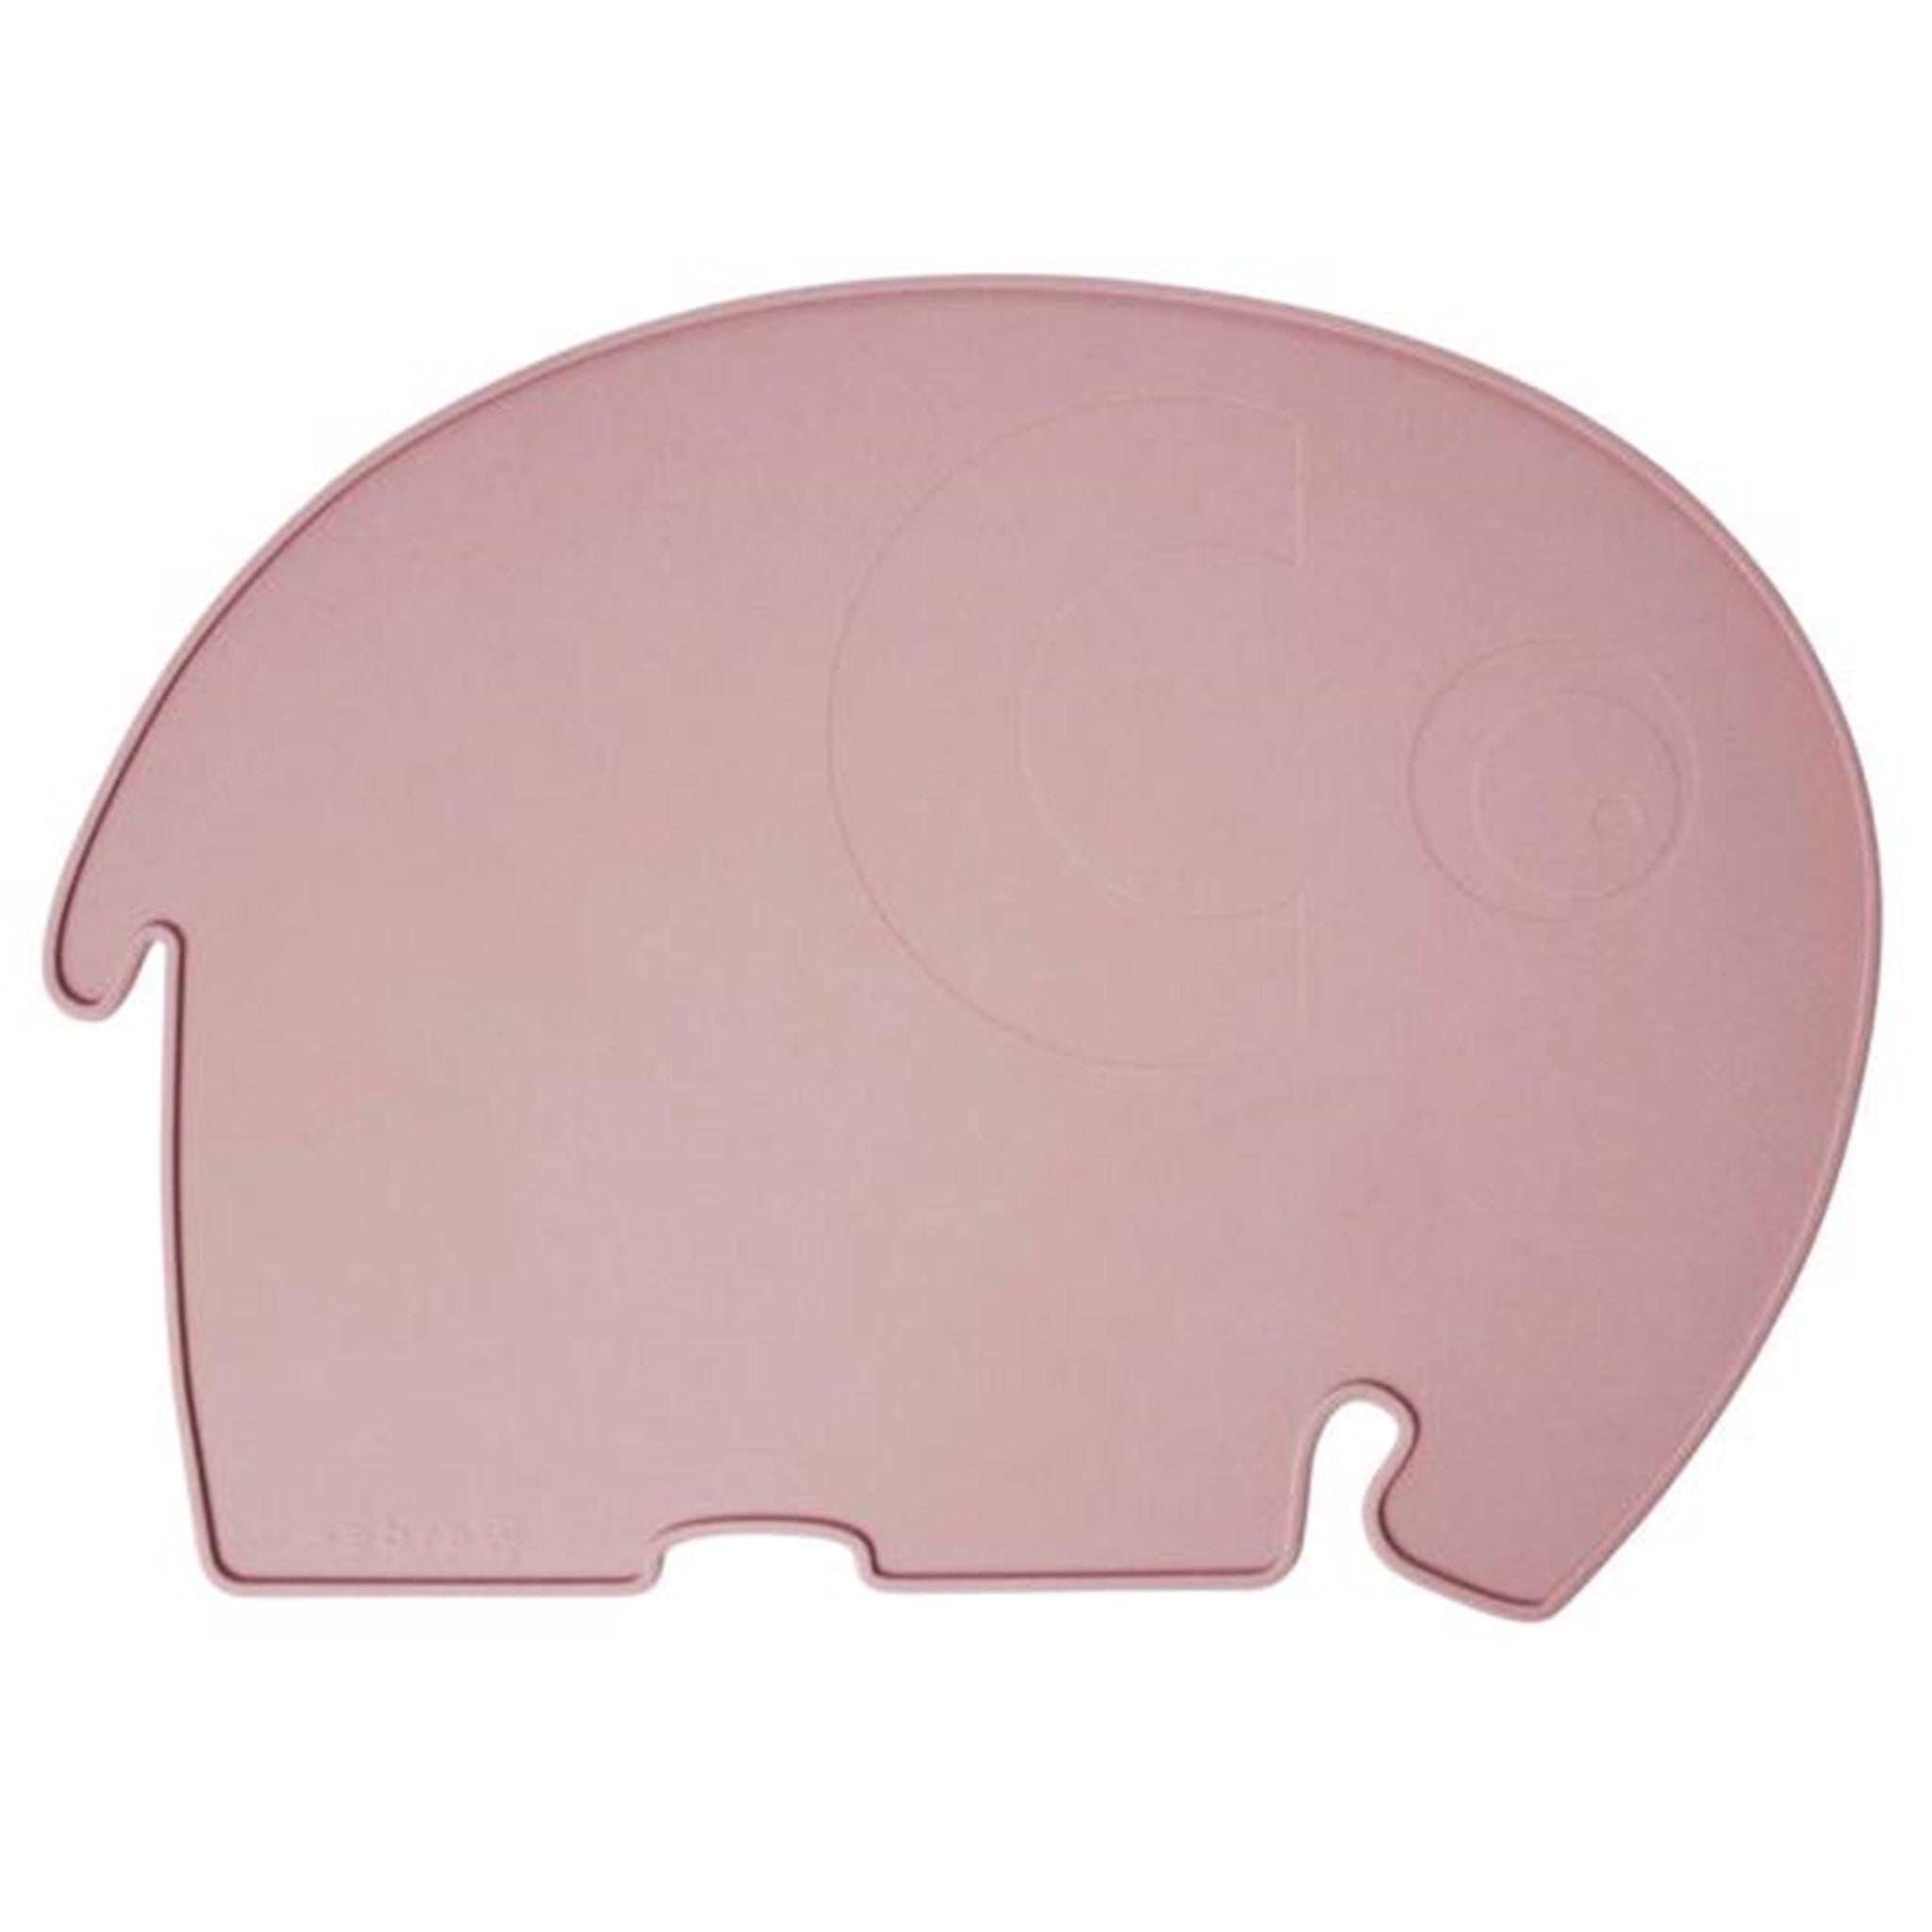 Sebra Placemat Elephant Blossom Pink